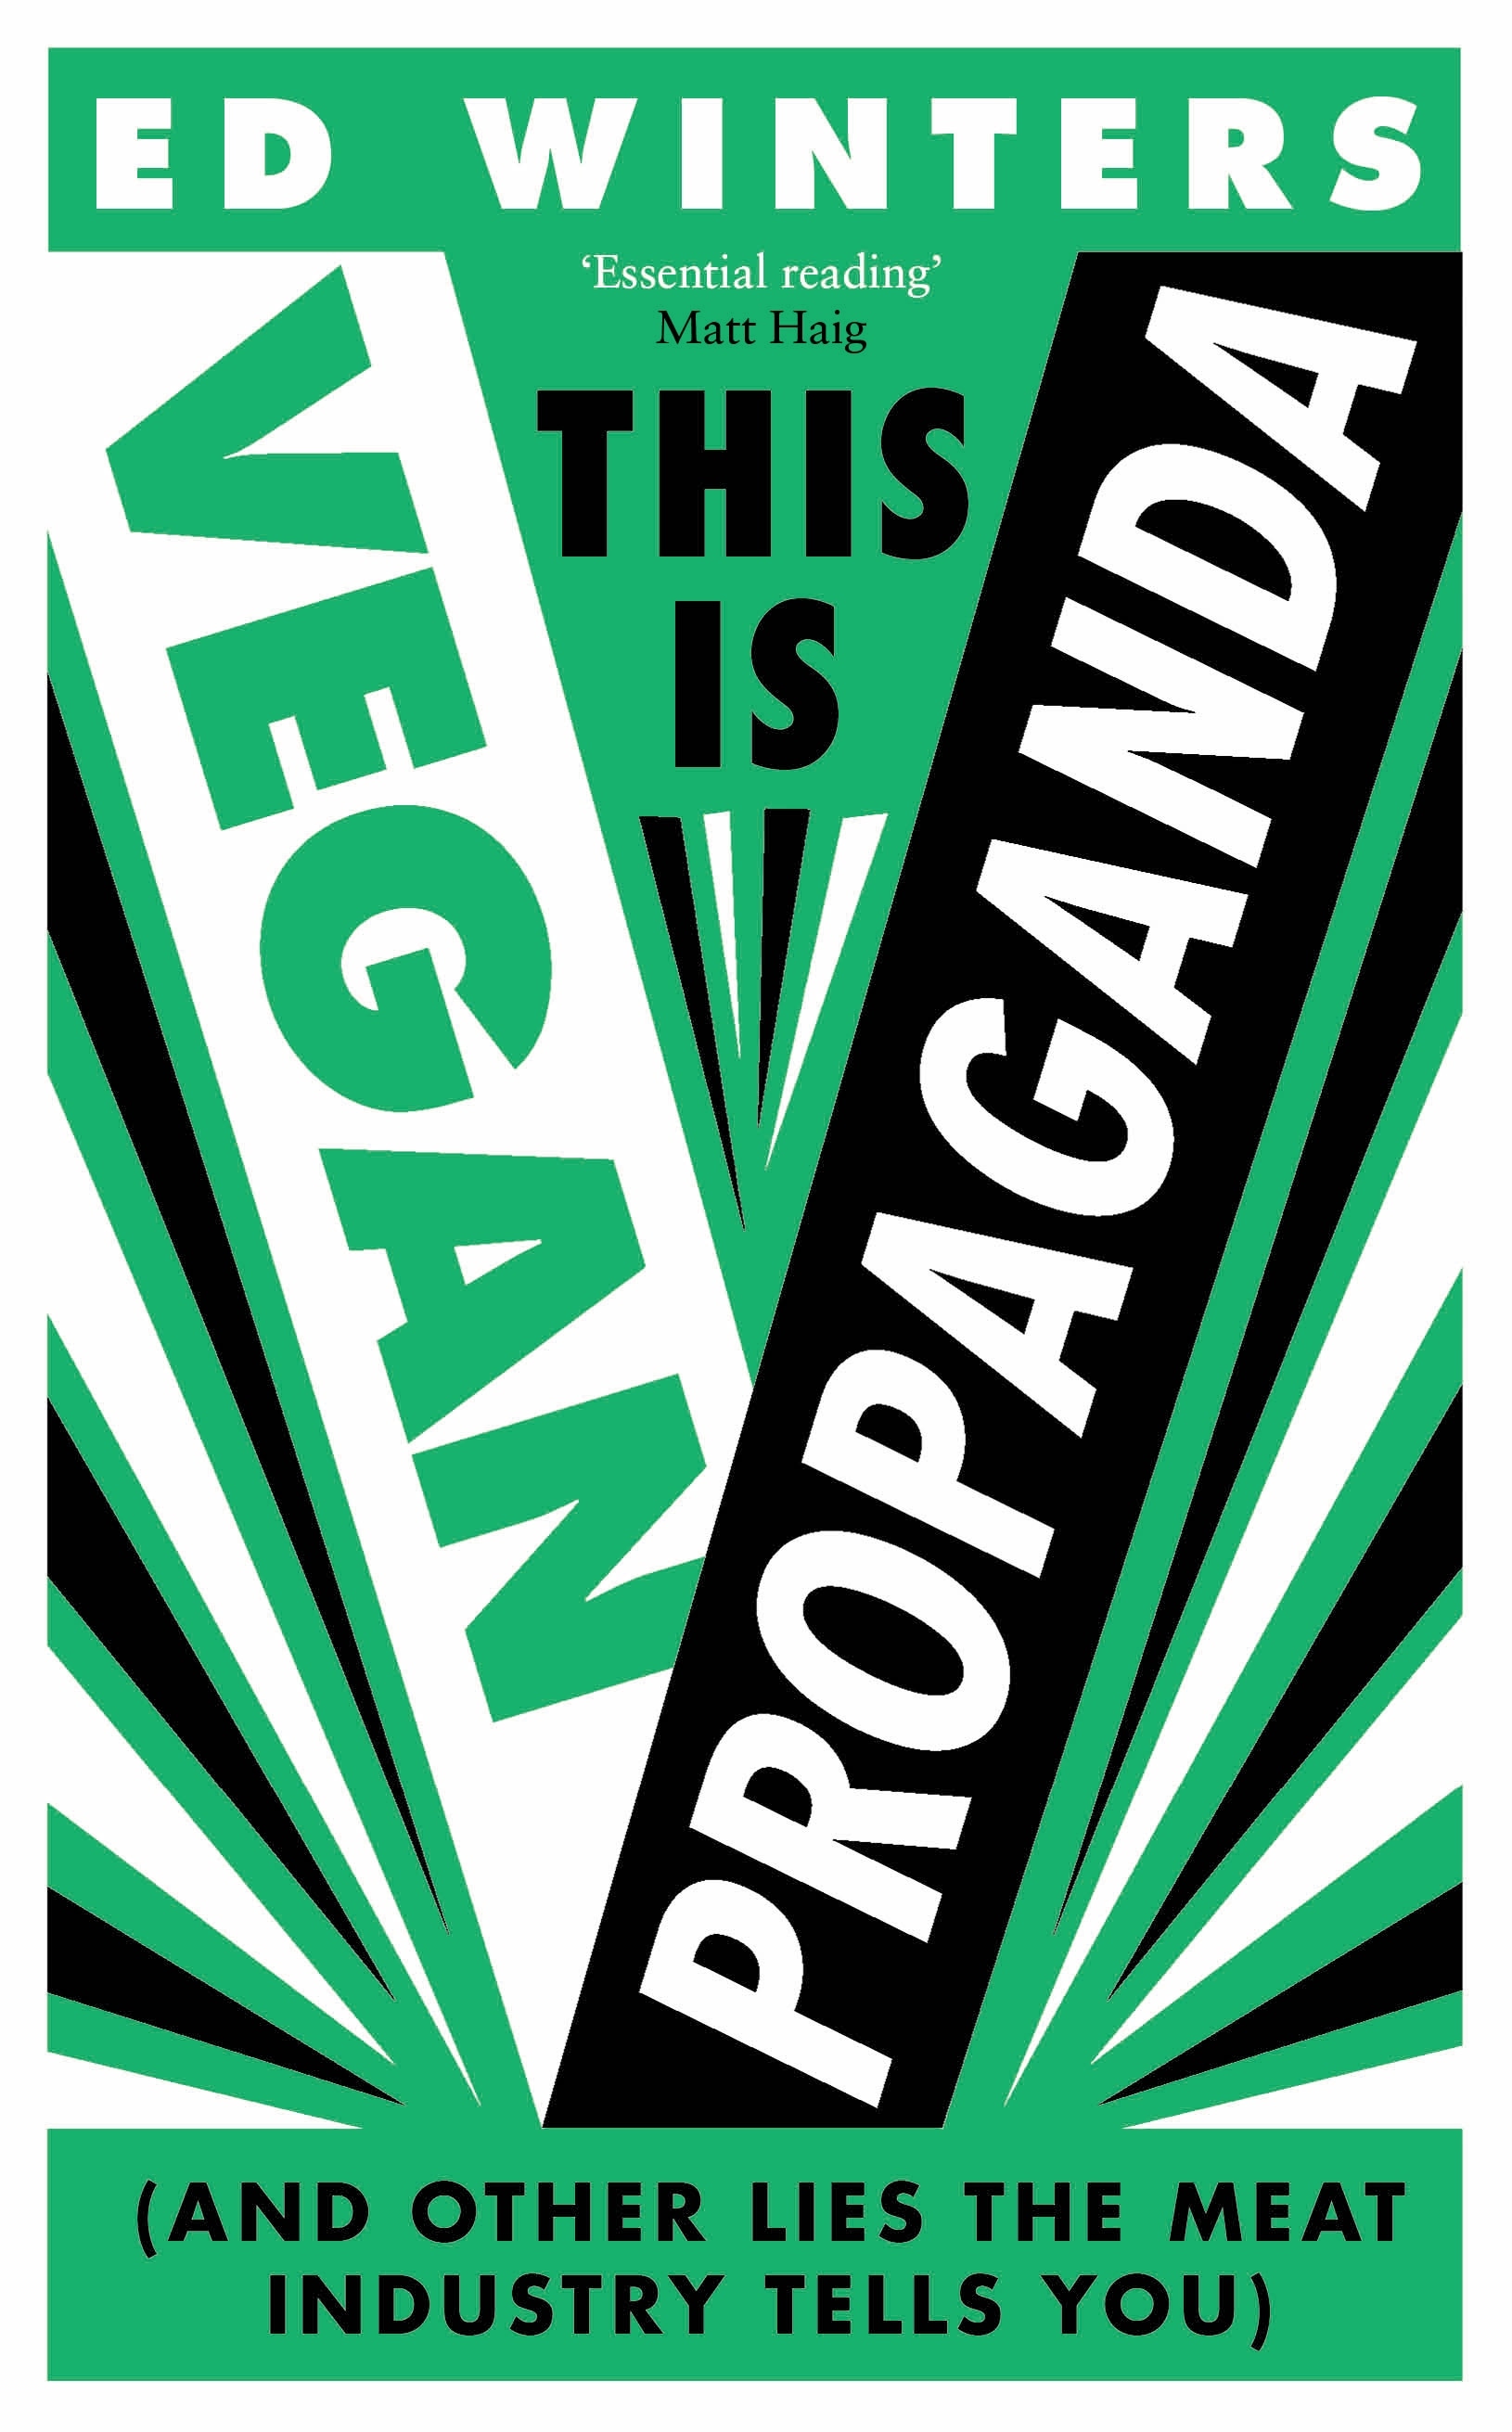 Book “This Is Vegan Propaganda” by Ed Winters — January 6, 2022